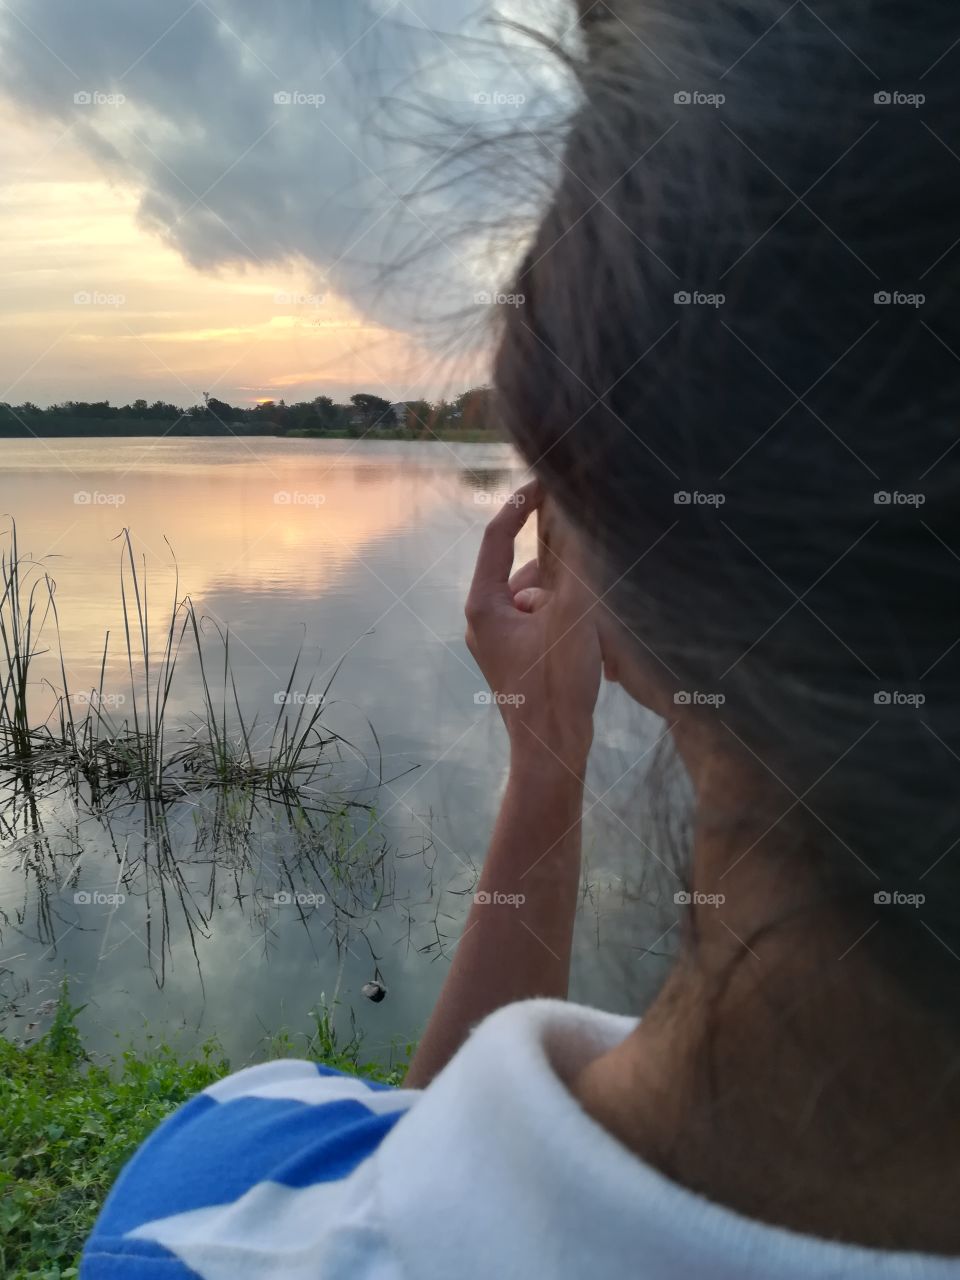 Capture the lake